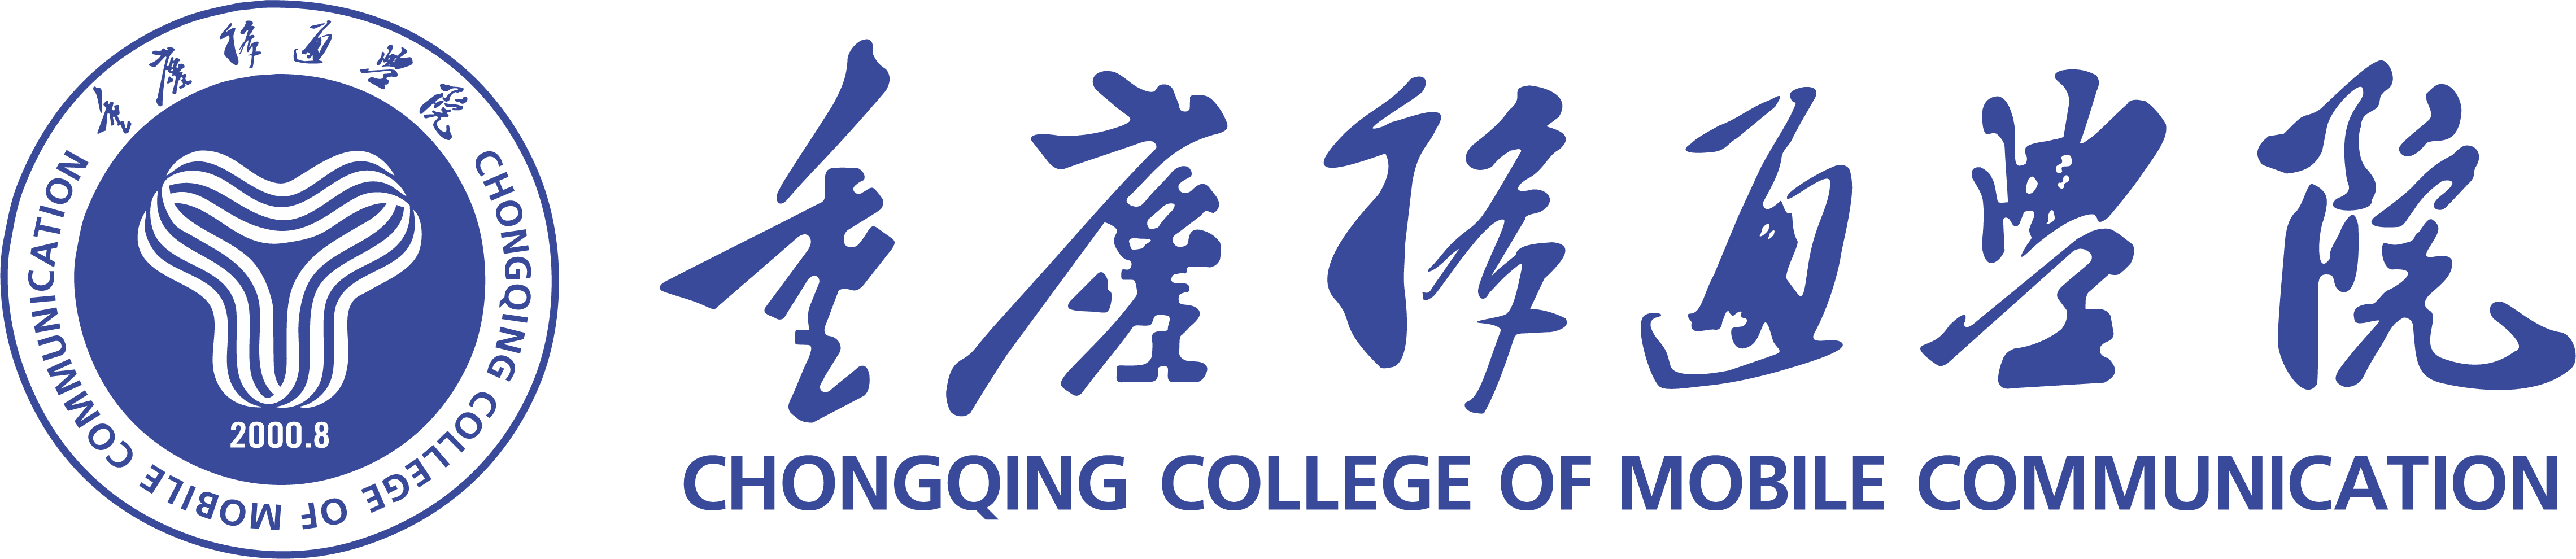 Chongqing College of Mobile Communication (重庆移通学院)